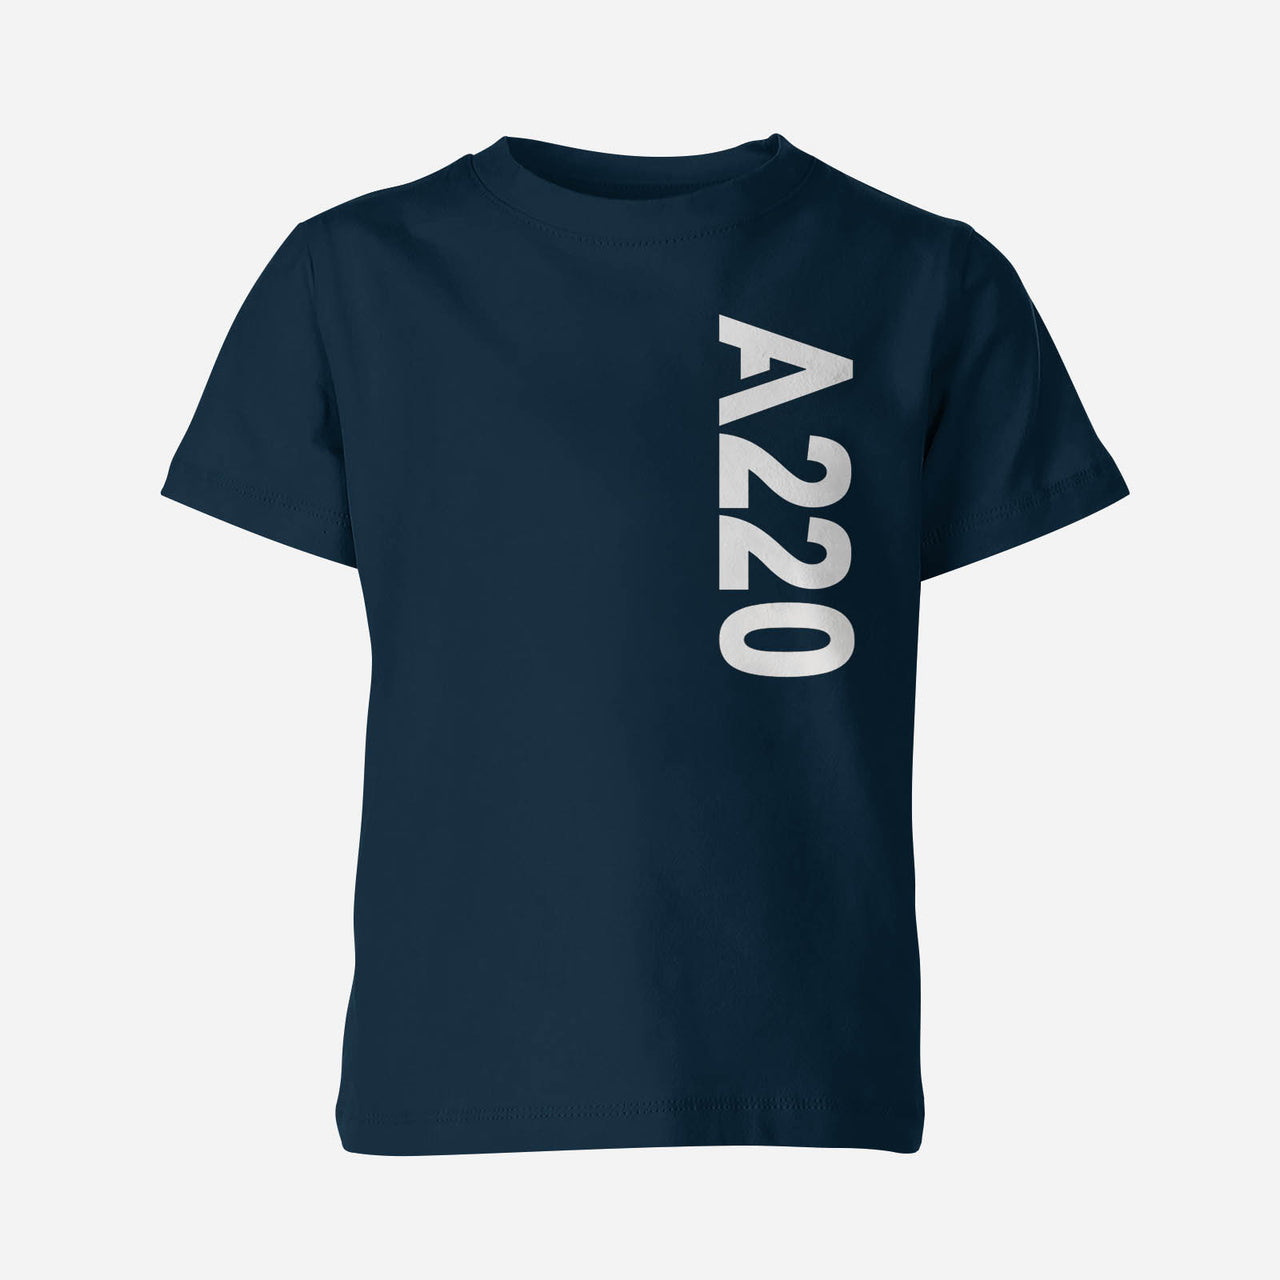 A220 Side Text Designed Children T-Shirts